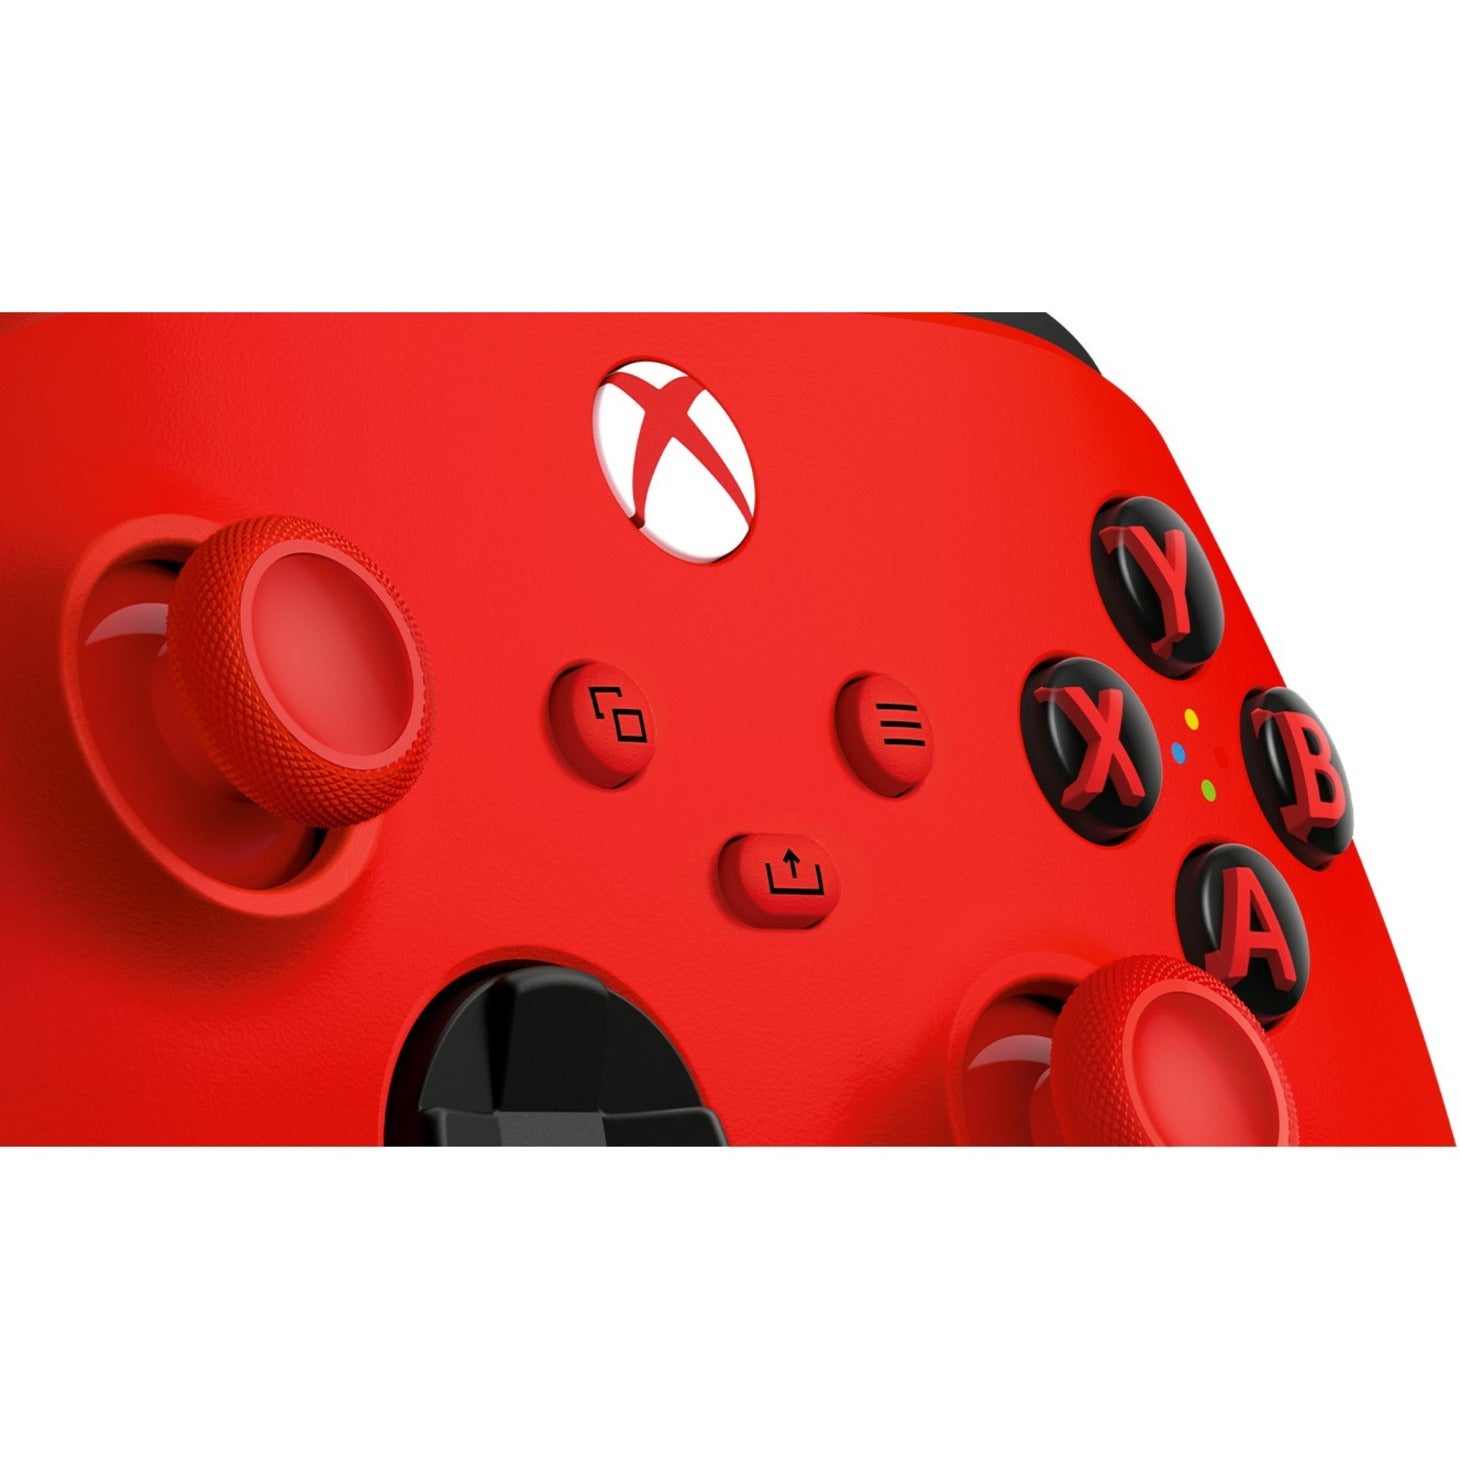 Microsoft QAU-00011 Xbox Wireless Controller Pulse Red Bluetooth Gaming Pad